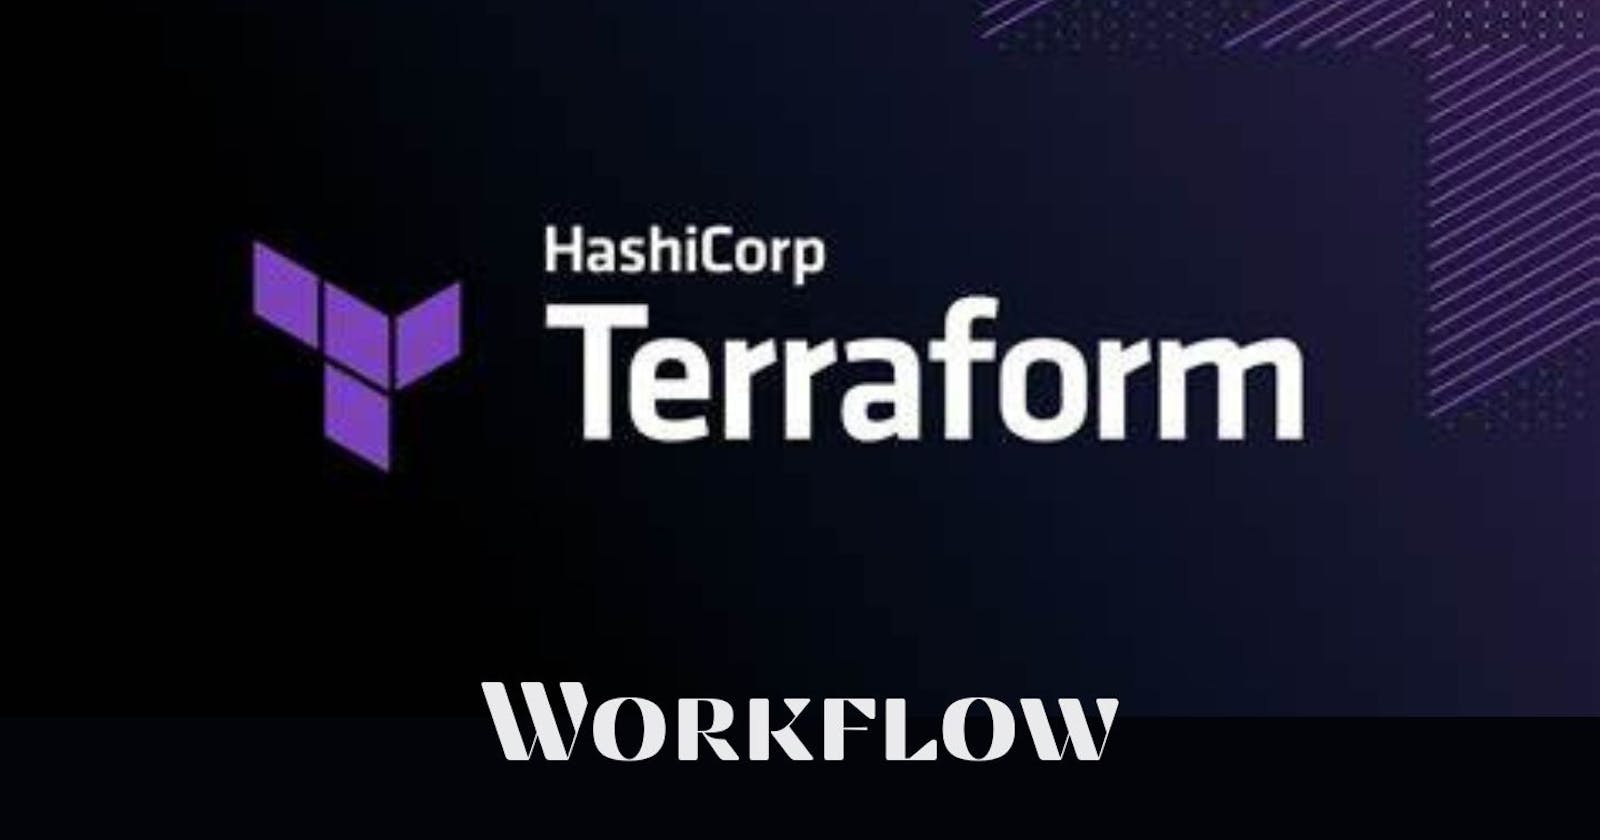 Terraform Introduction: Workflow